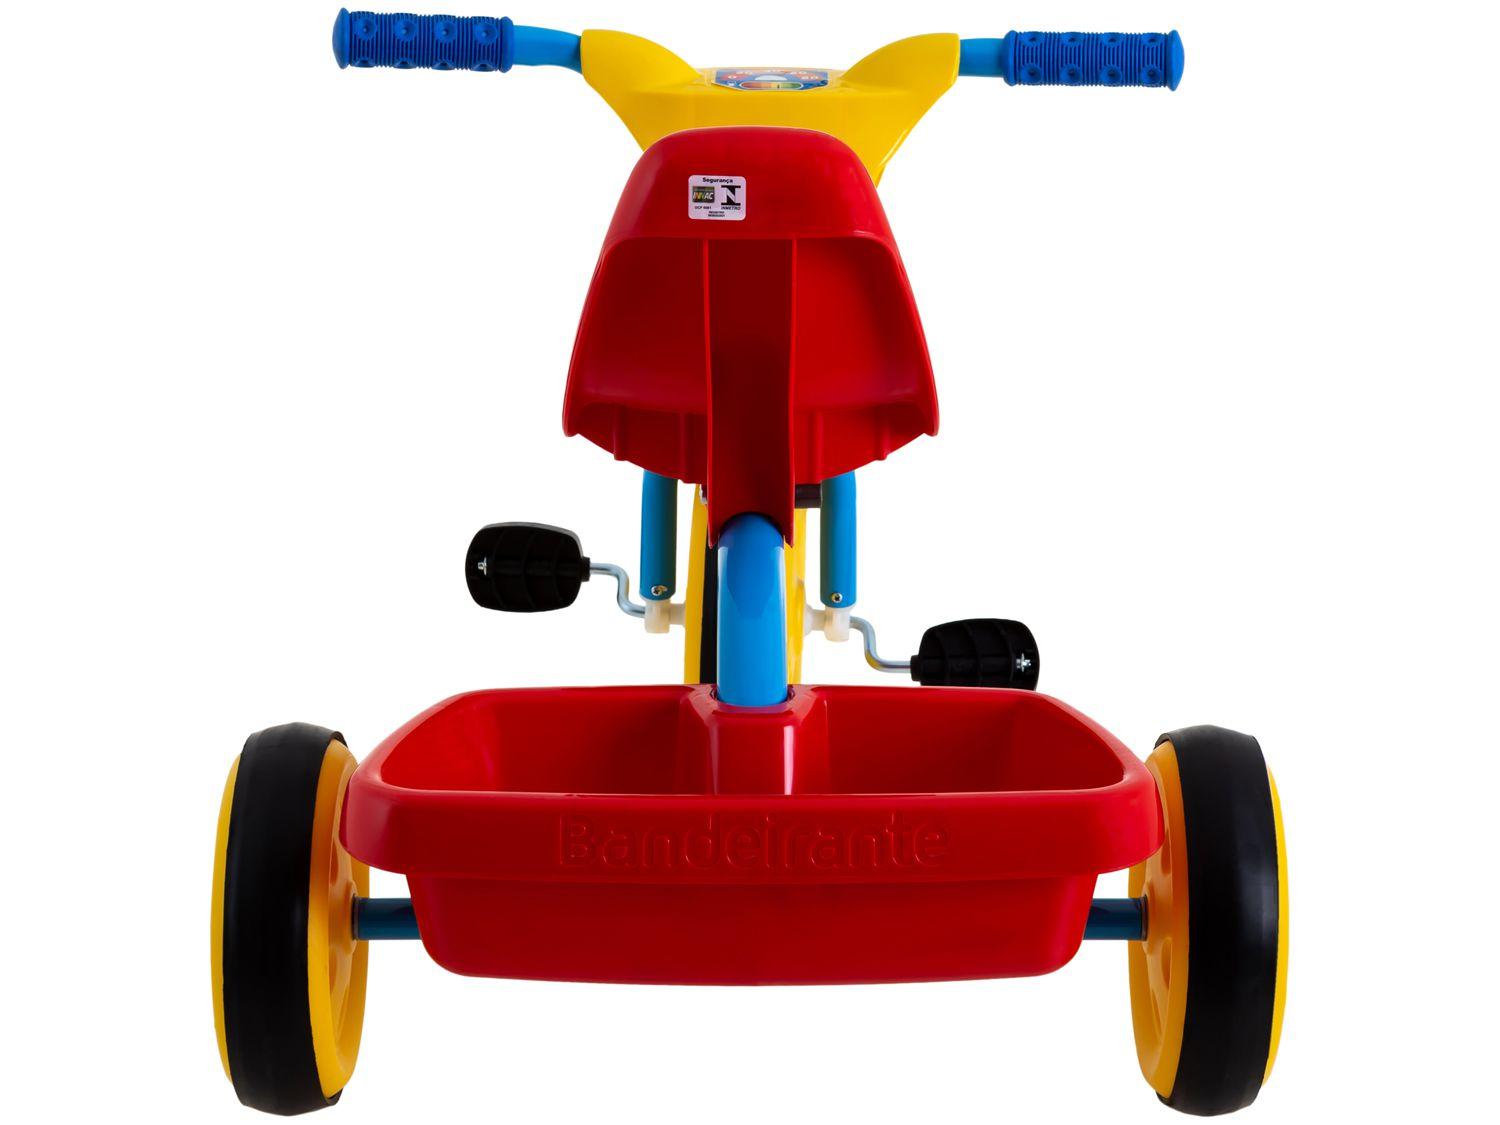 Triciclo Infantil Bandy - Bandeirante, Shopping